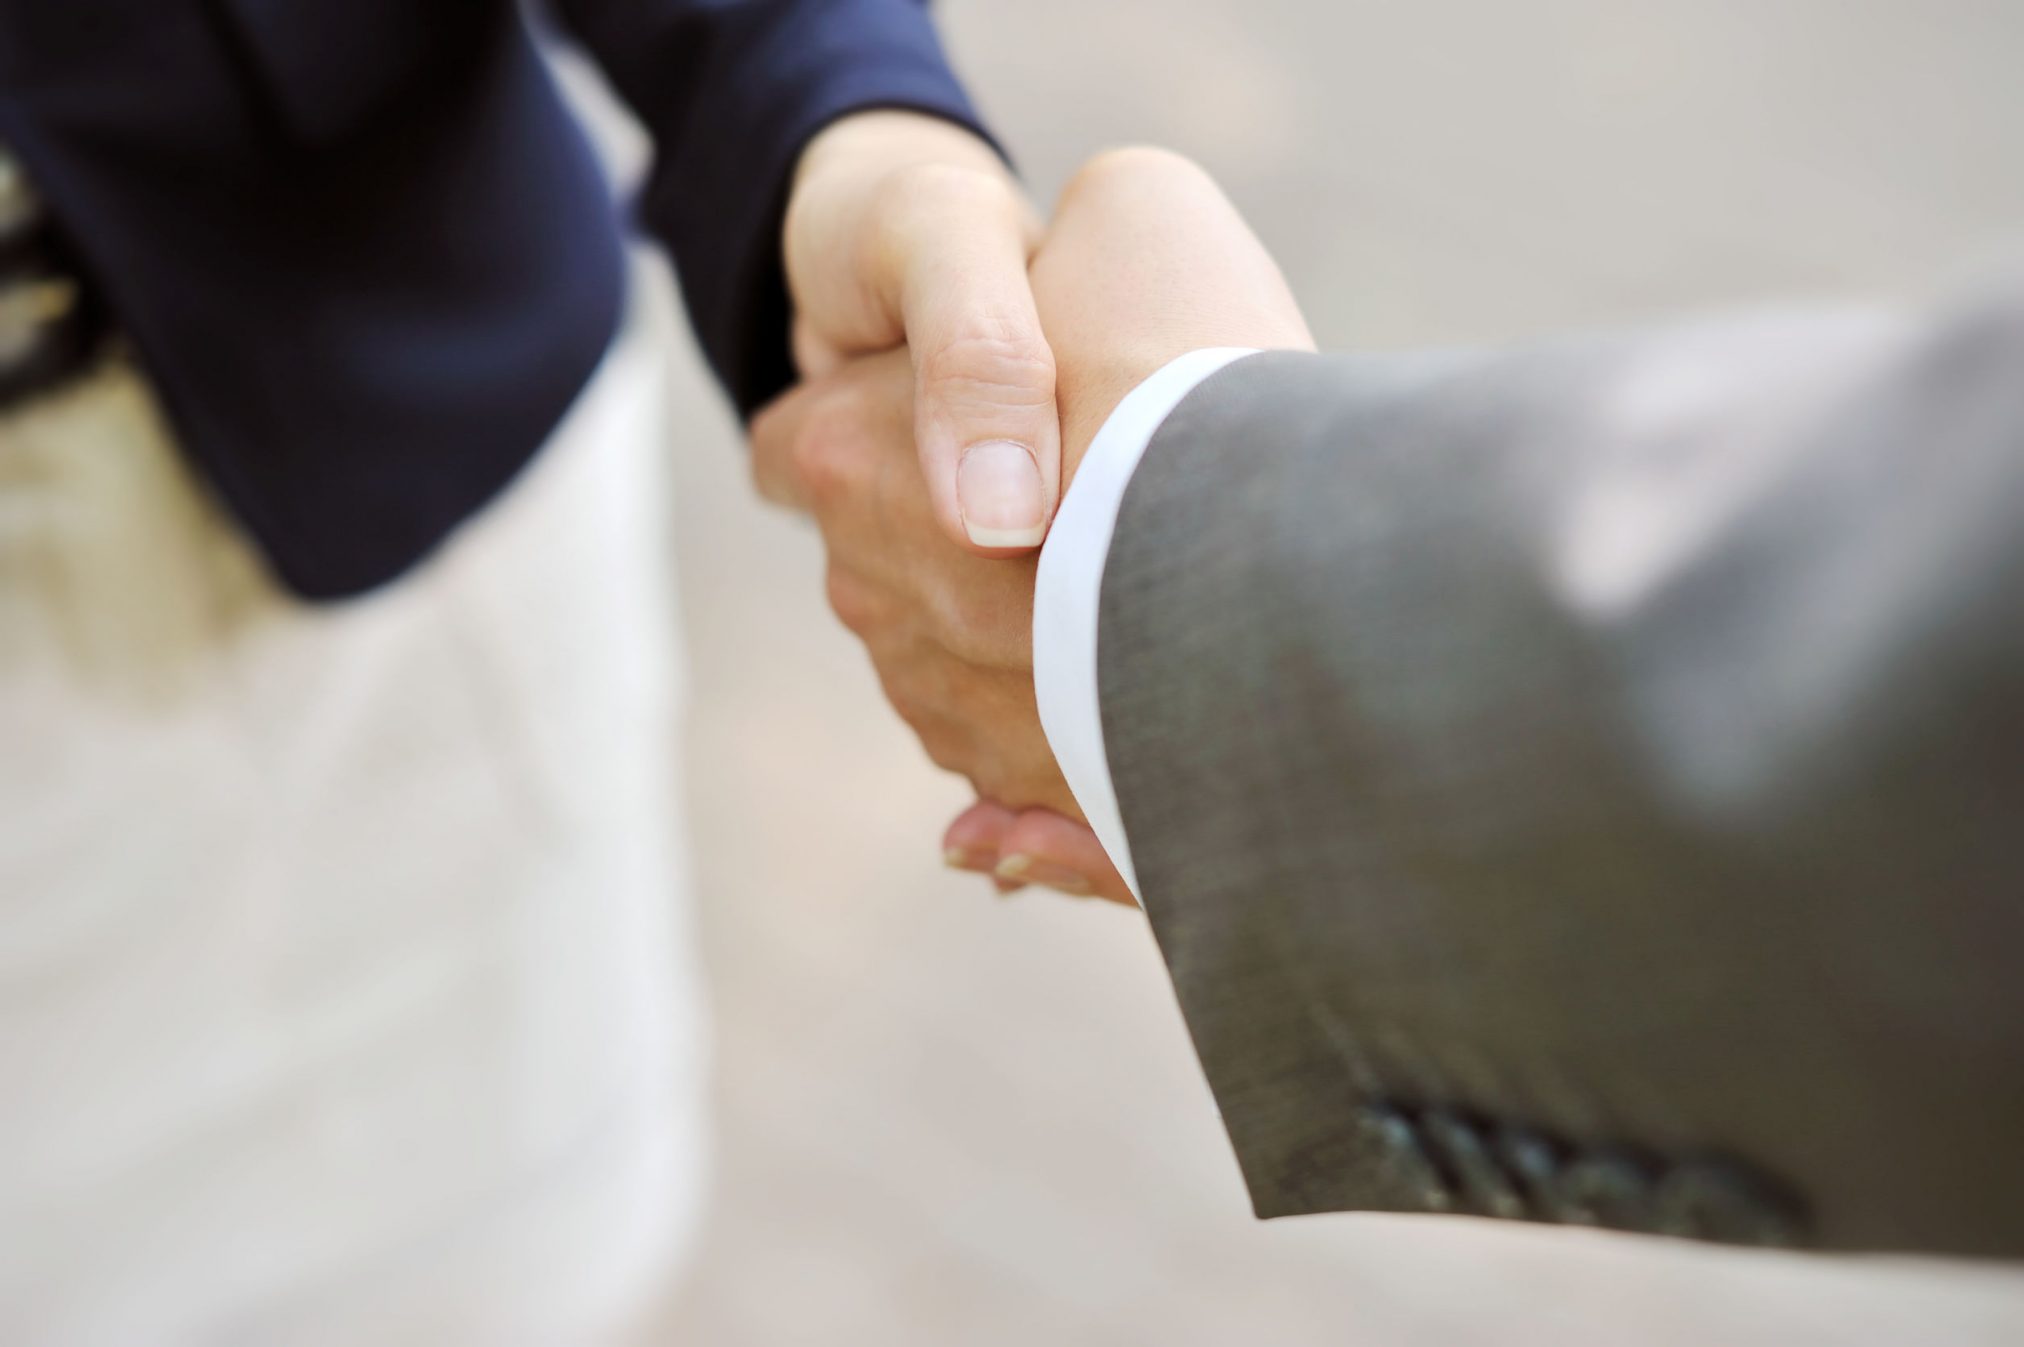 shaking hands handshake business deal partnership